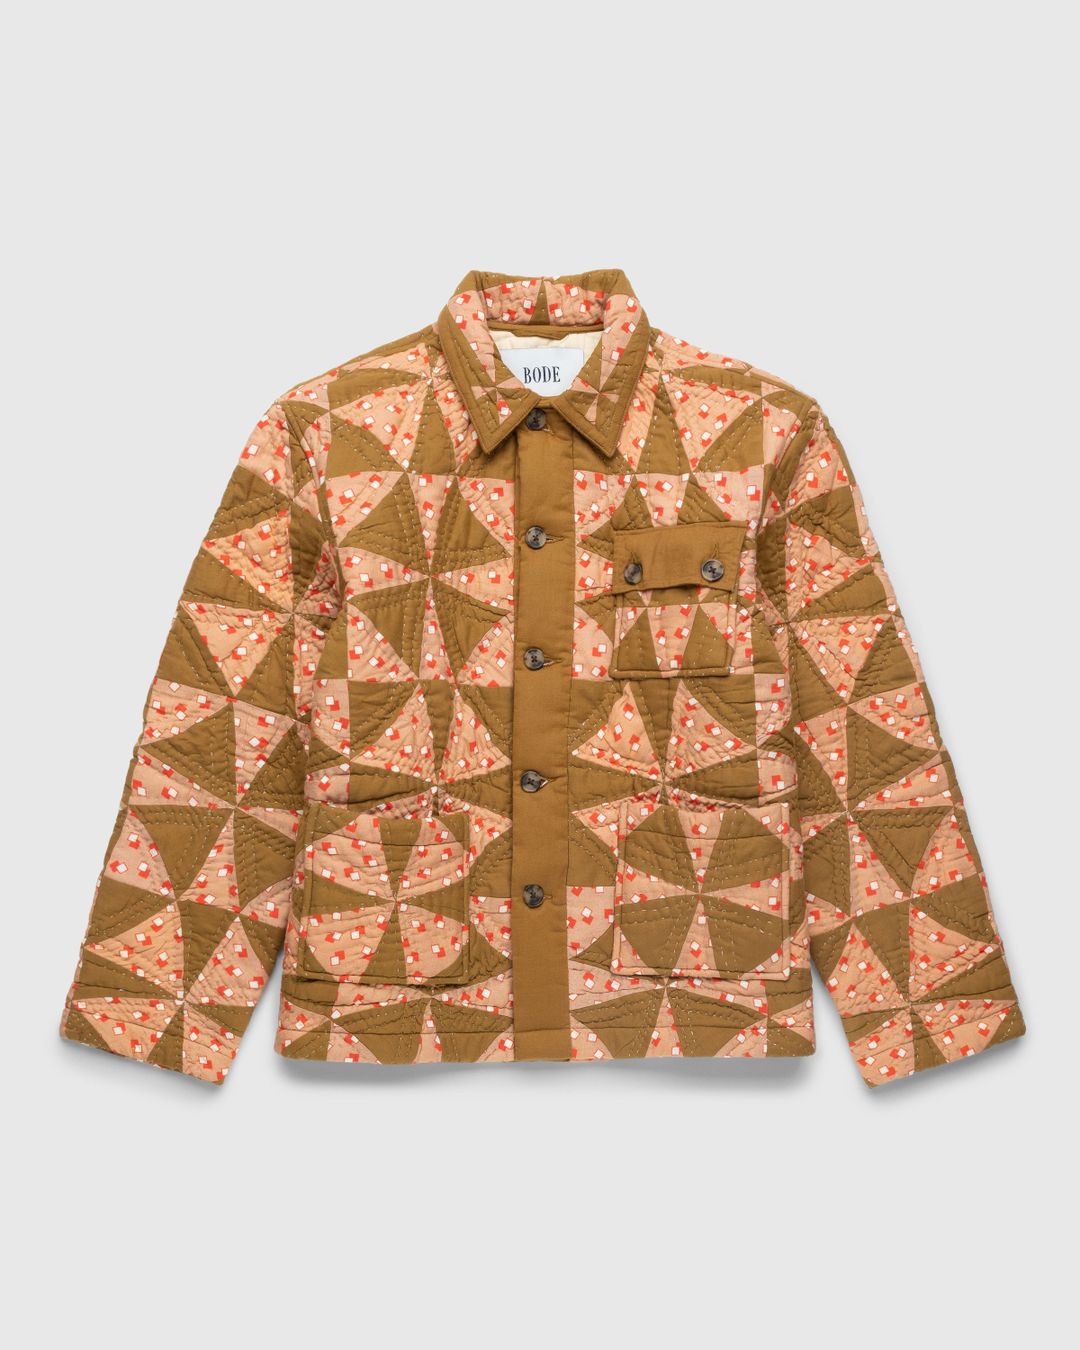 Bode – Kaleidoscope Quilt Jacket | Highsnobiety Shop